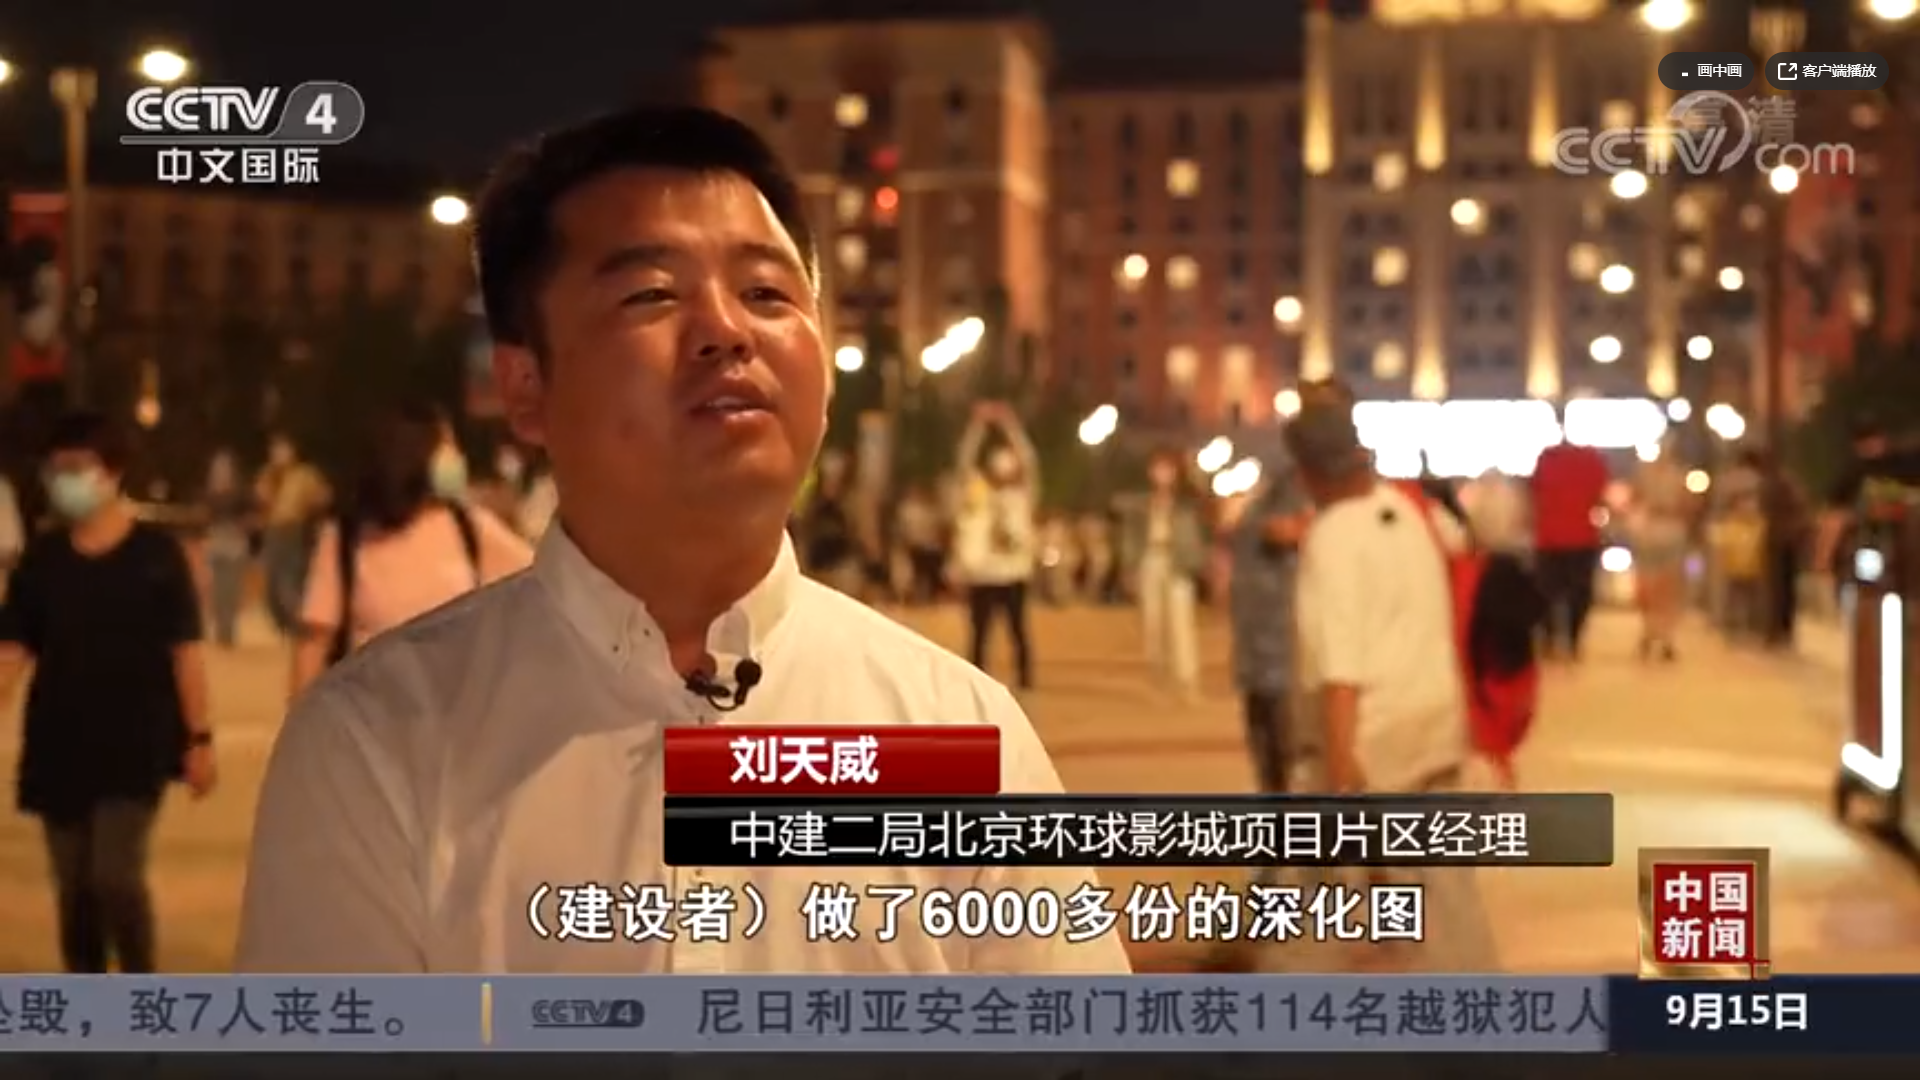 CCTV4：揭秘全球最大環球影城建造背后的“中國匠心”